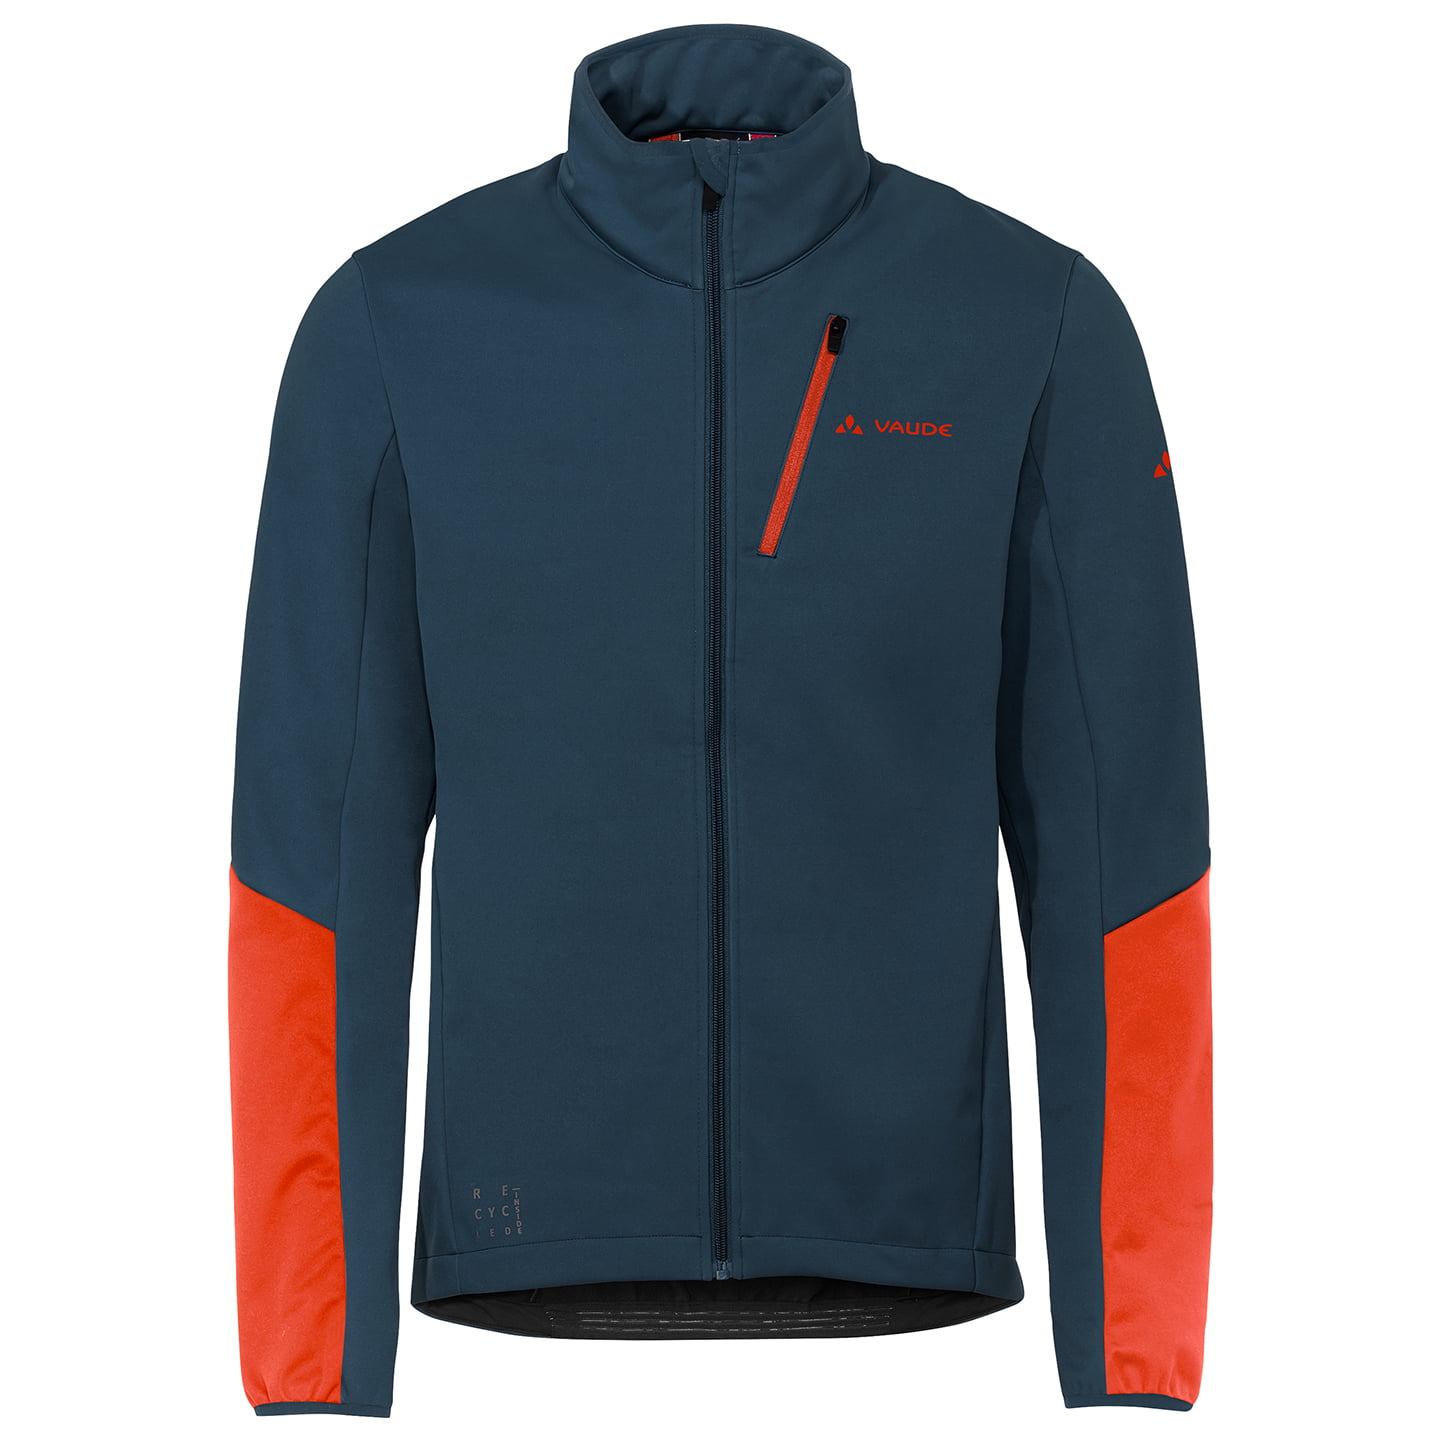 VAUDE Matera II winter jacket Thermal Jacket, for men, size L, Winter jacket, Cycle clothing